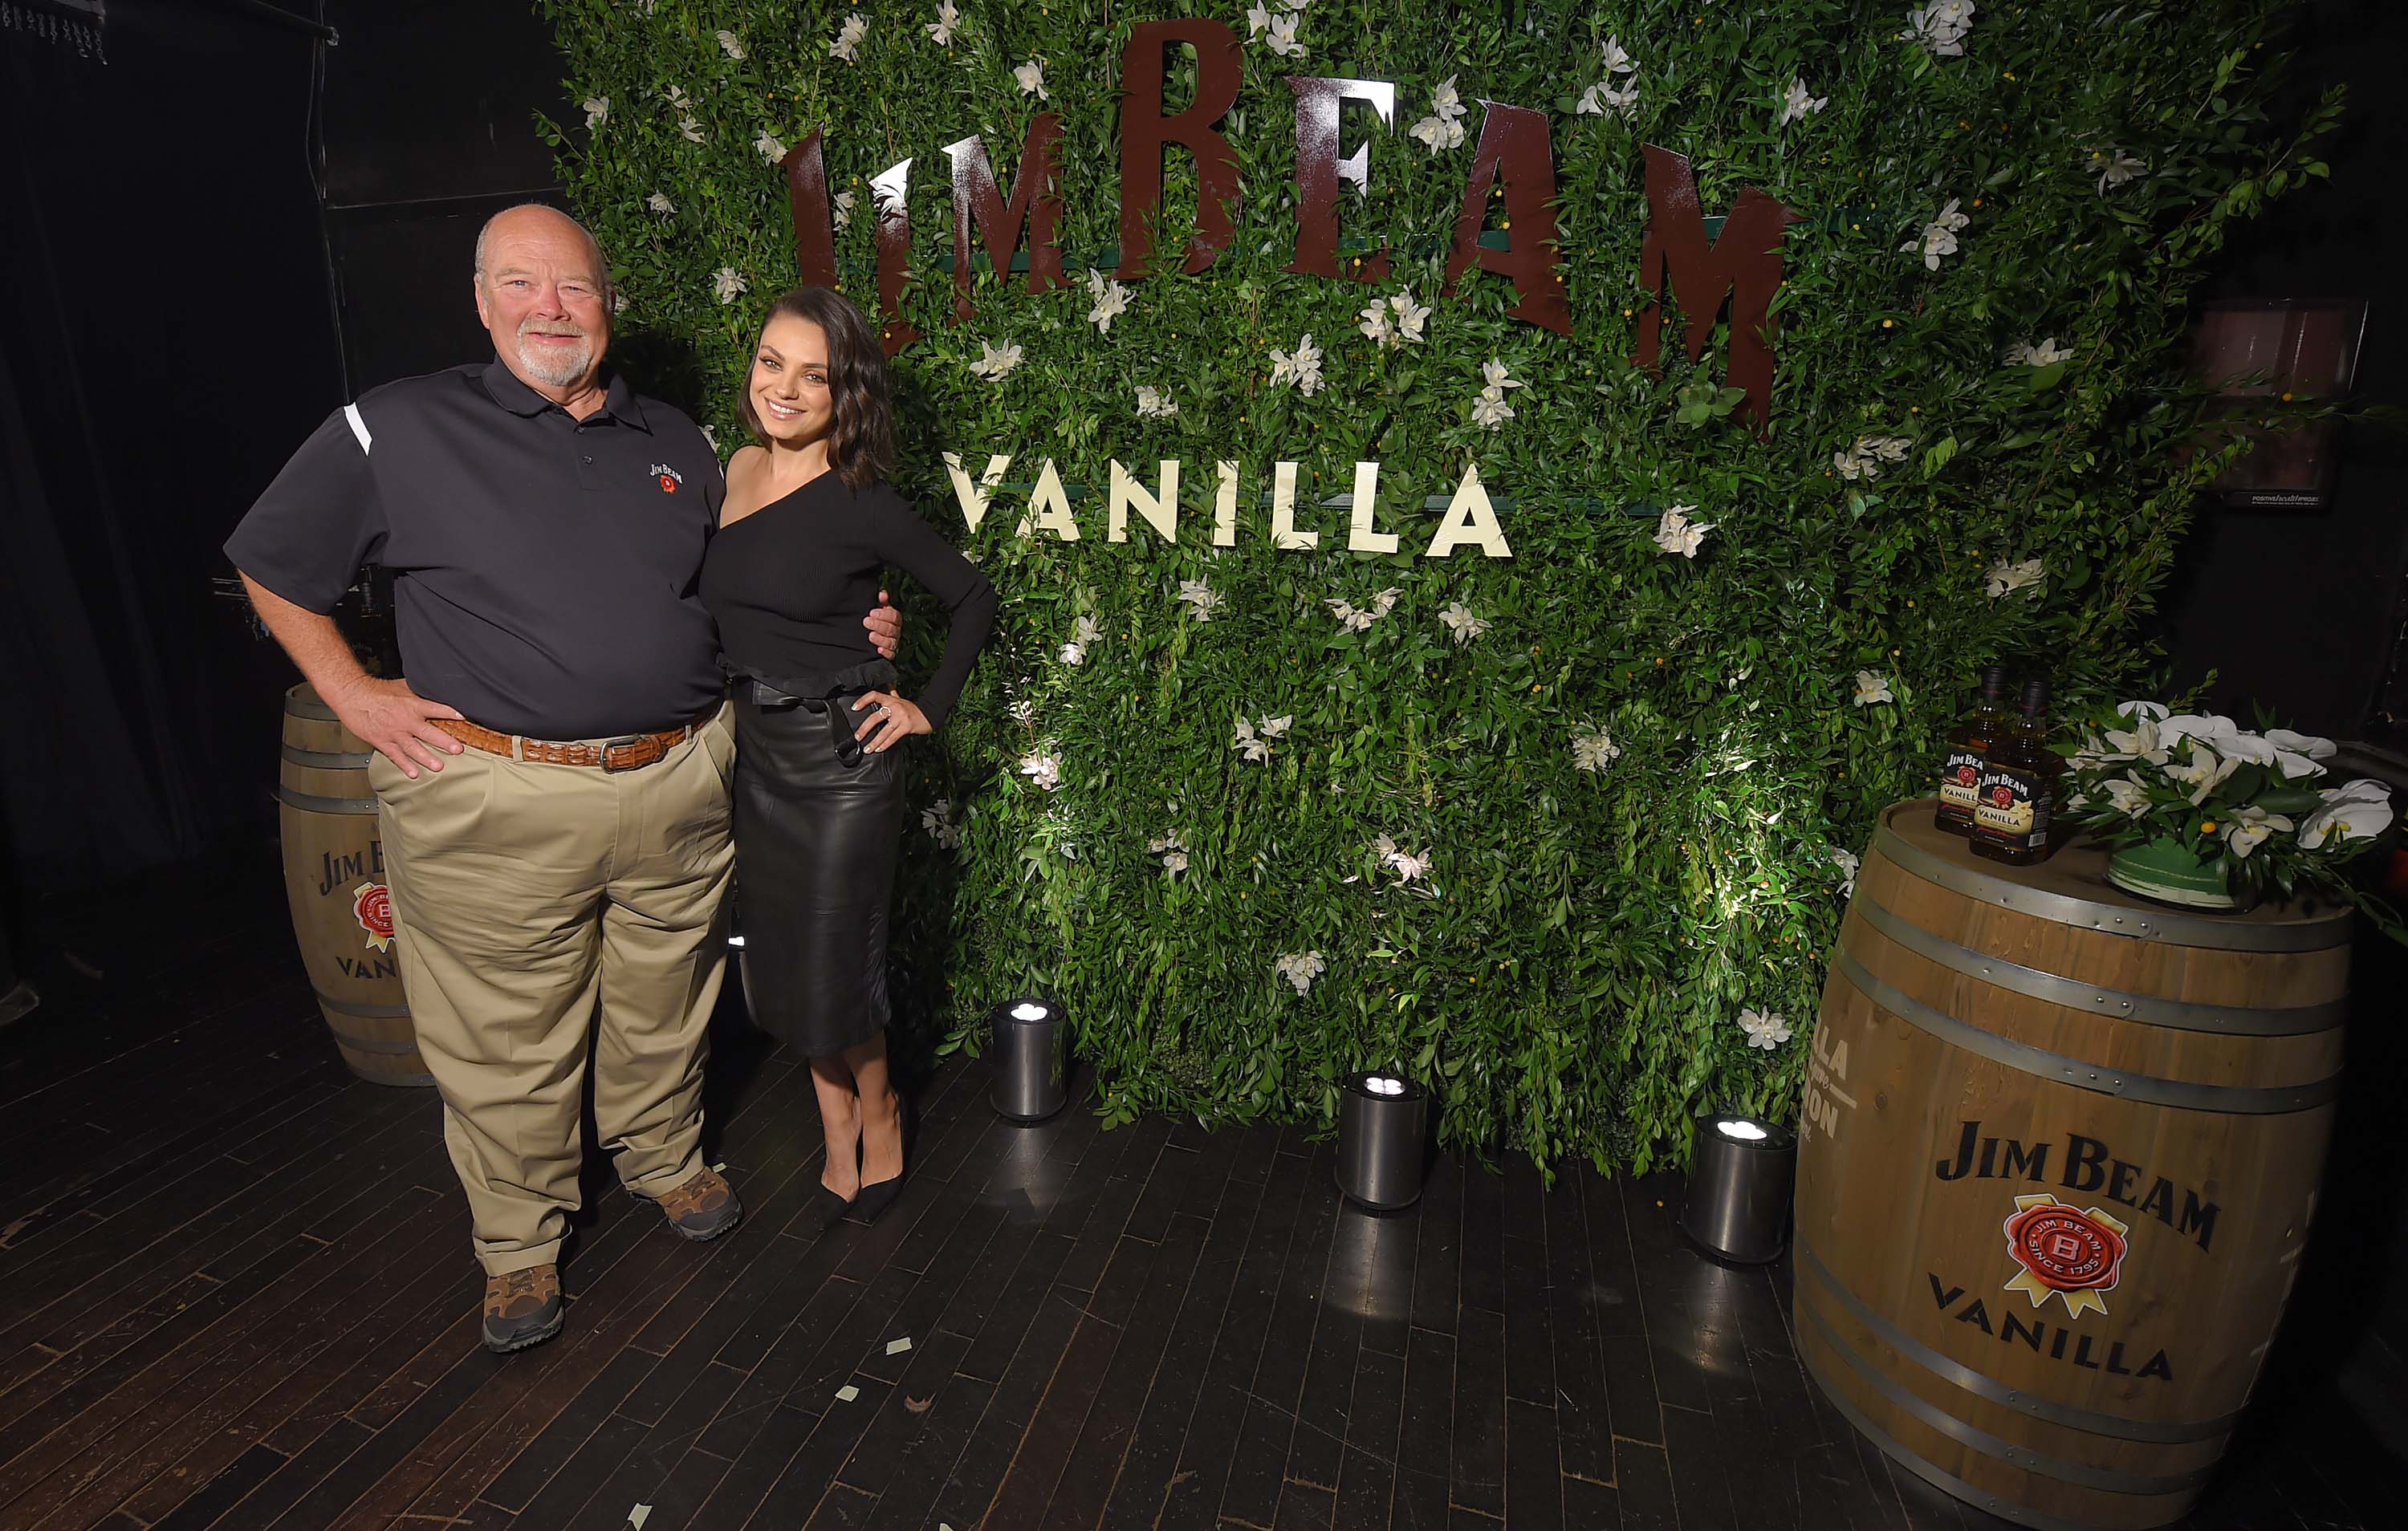 Mila Kunis attends Jim Beam Vanilla Launch Party